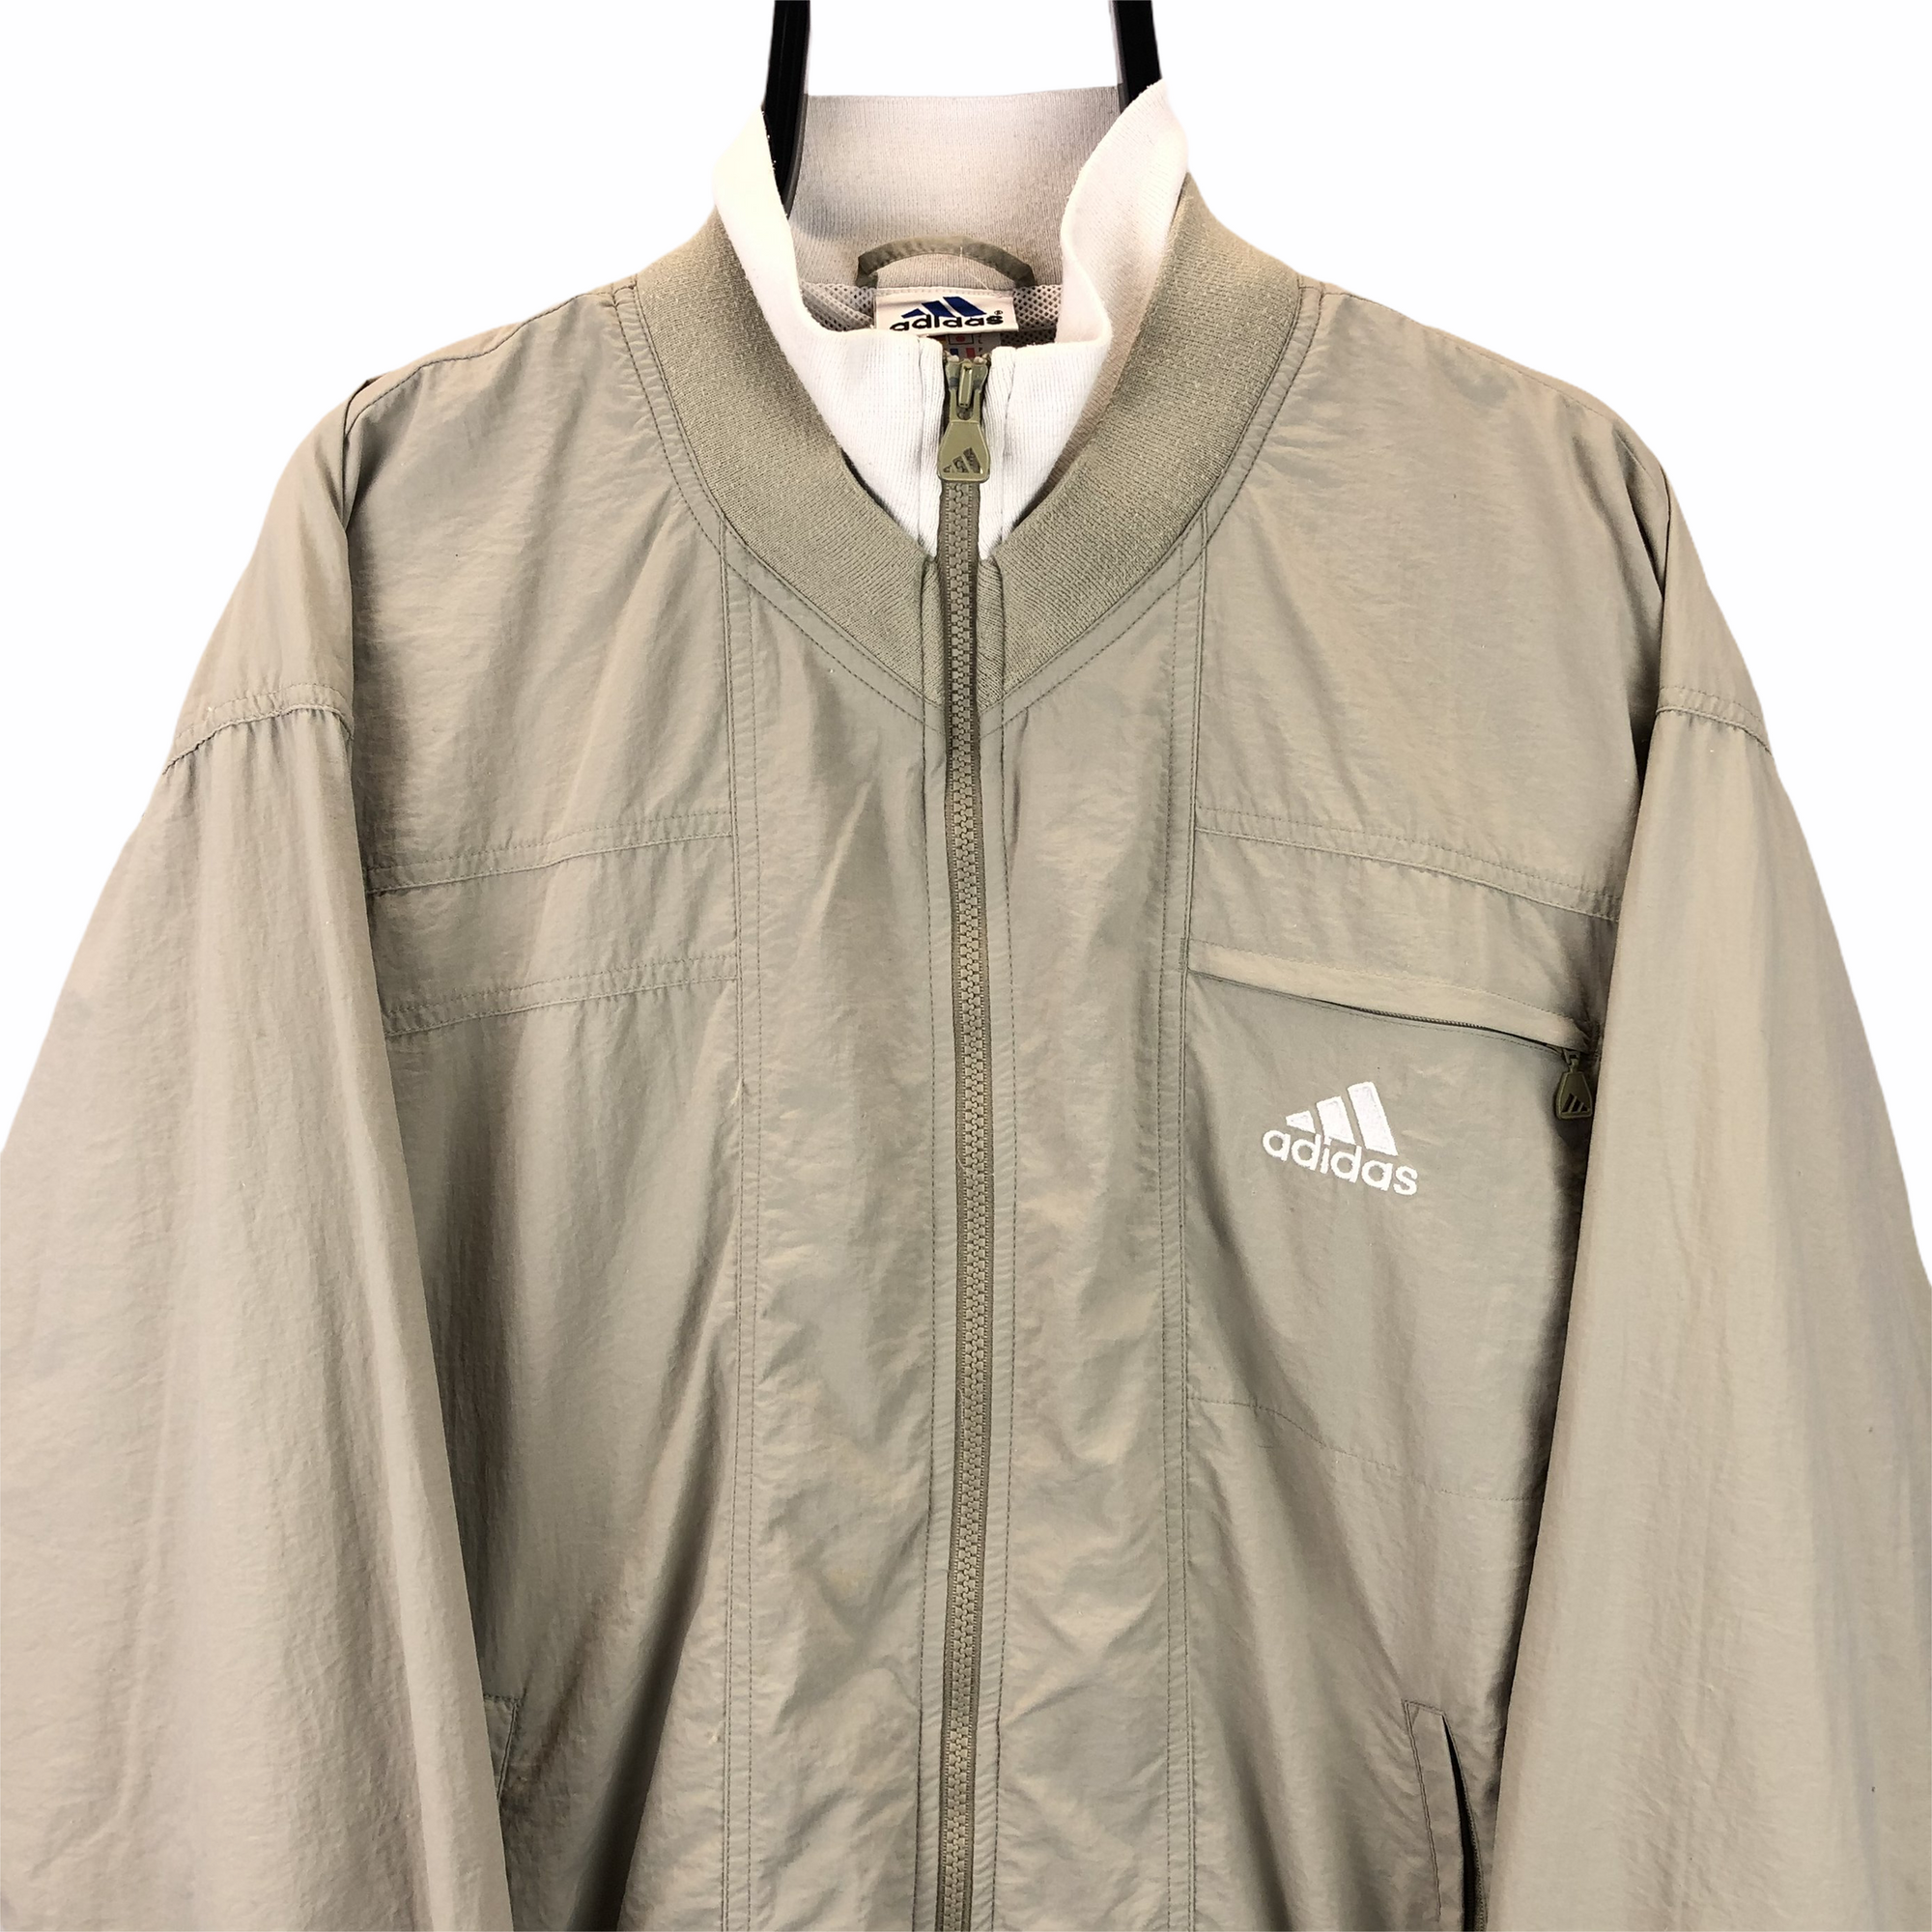 Vintage 90s Adidas Track Jacket in Beige - Men's Large/Women's XL